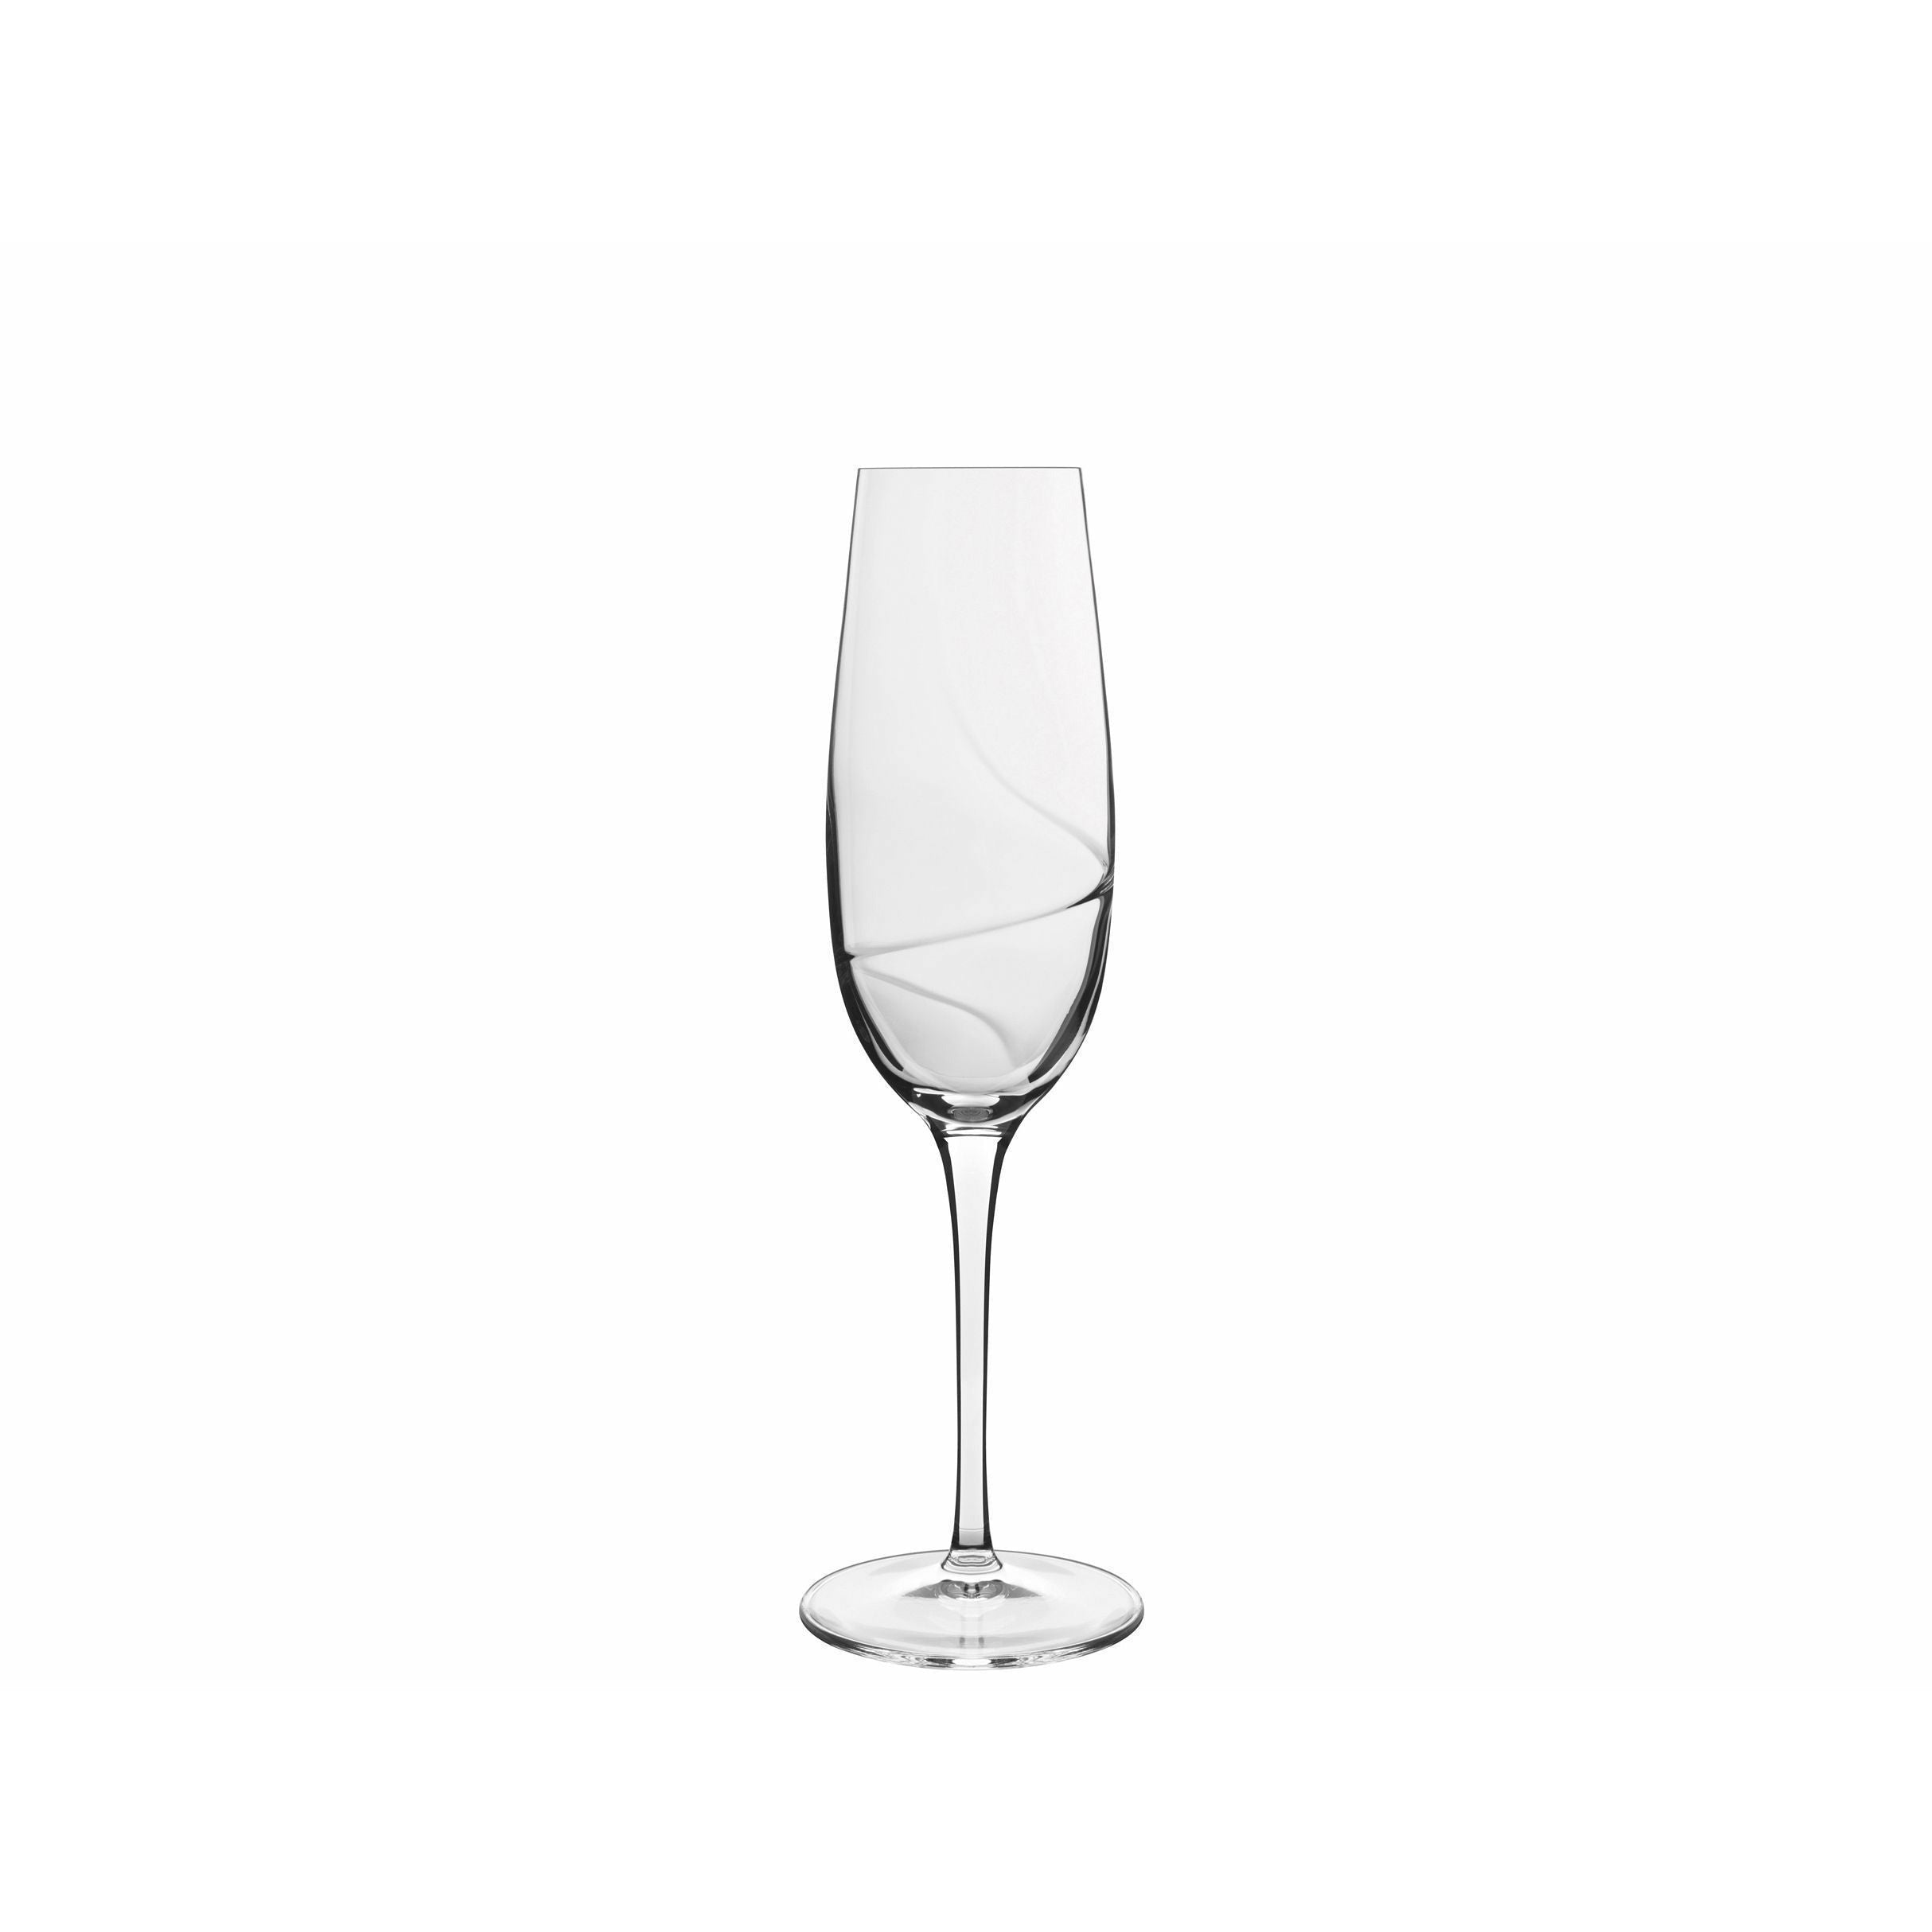 Luigi Bormioli Aero Champagne Glass, Set Of 6